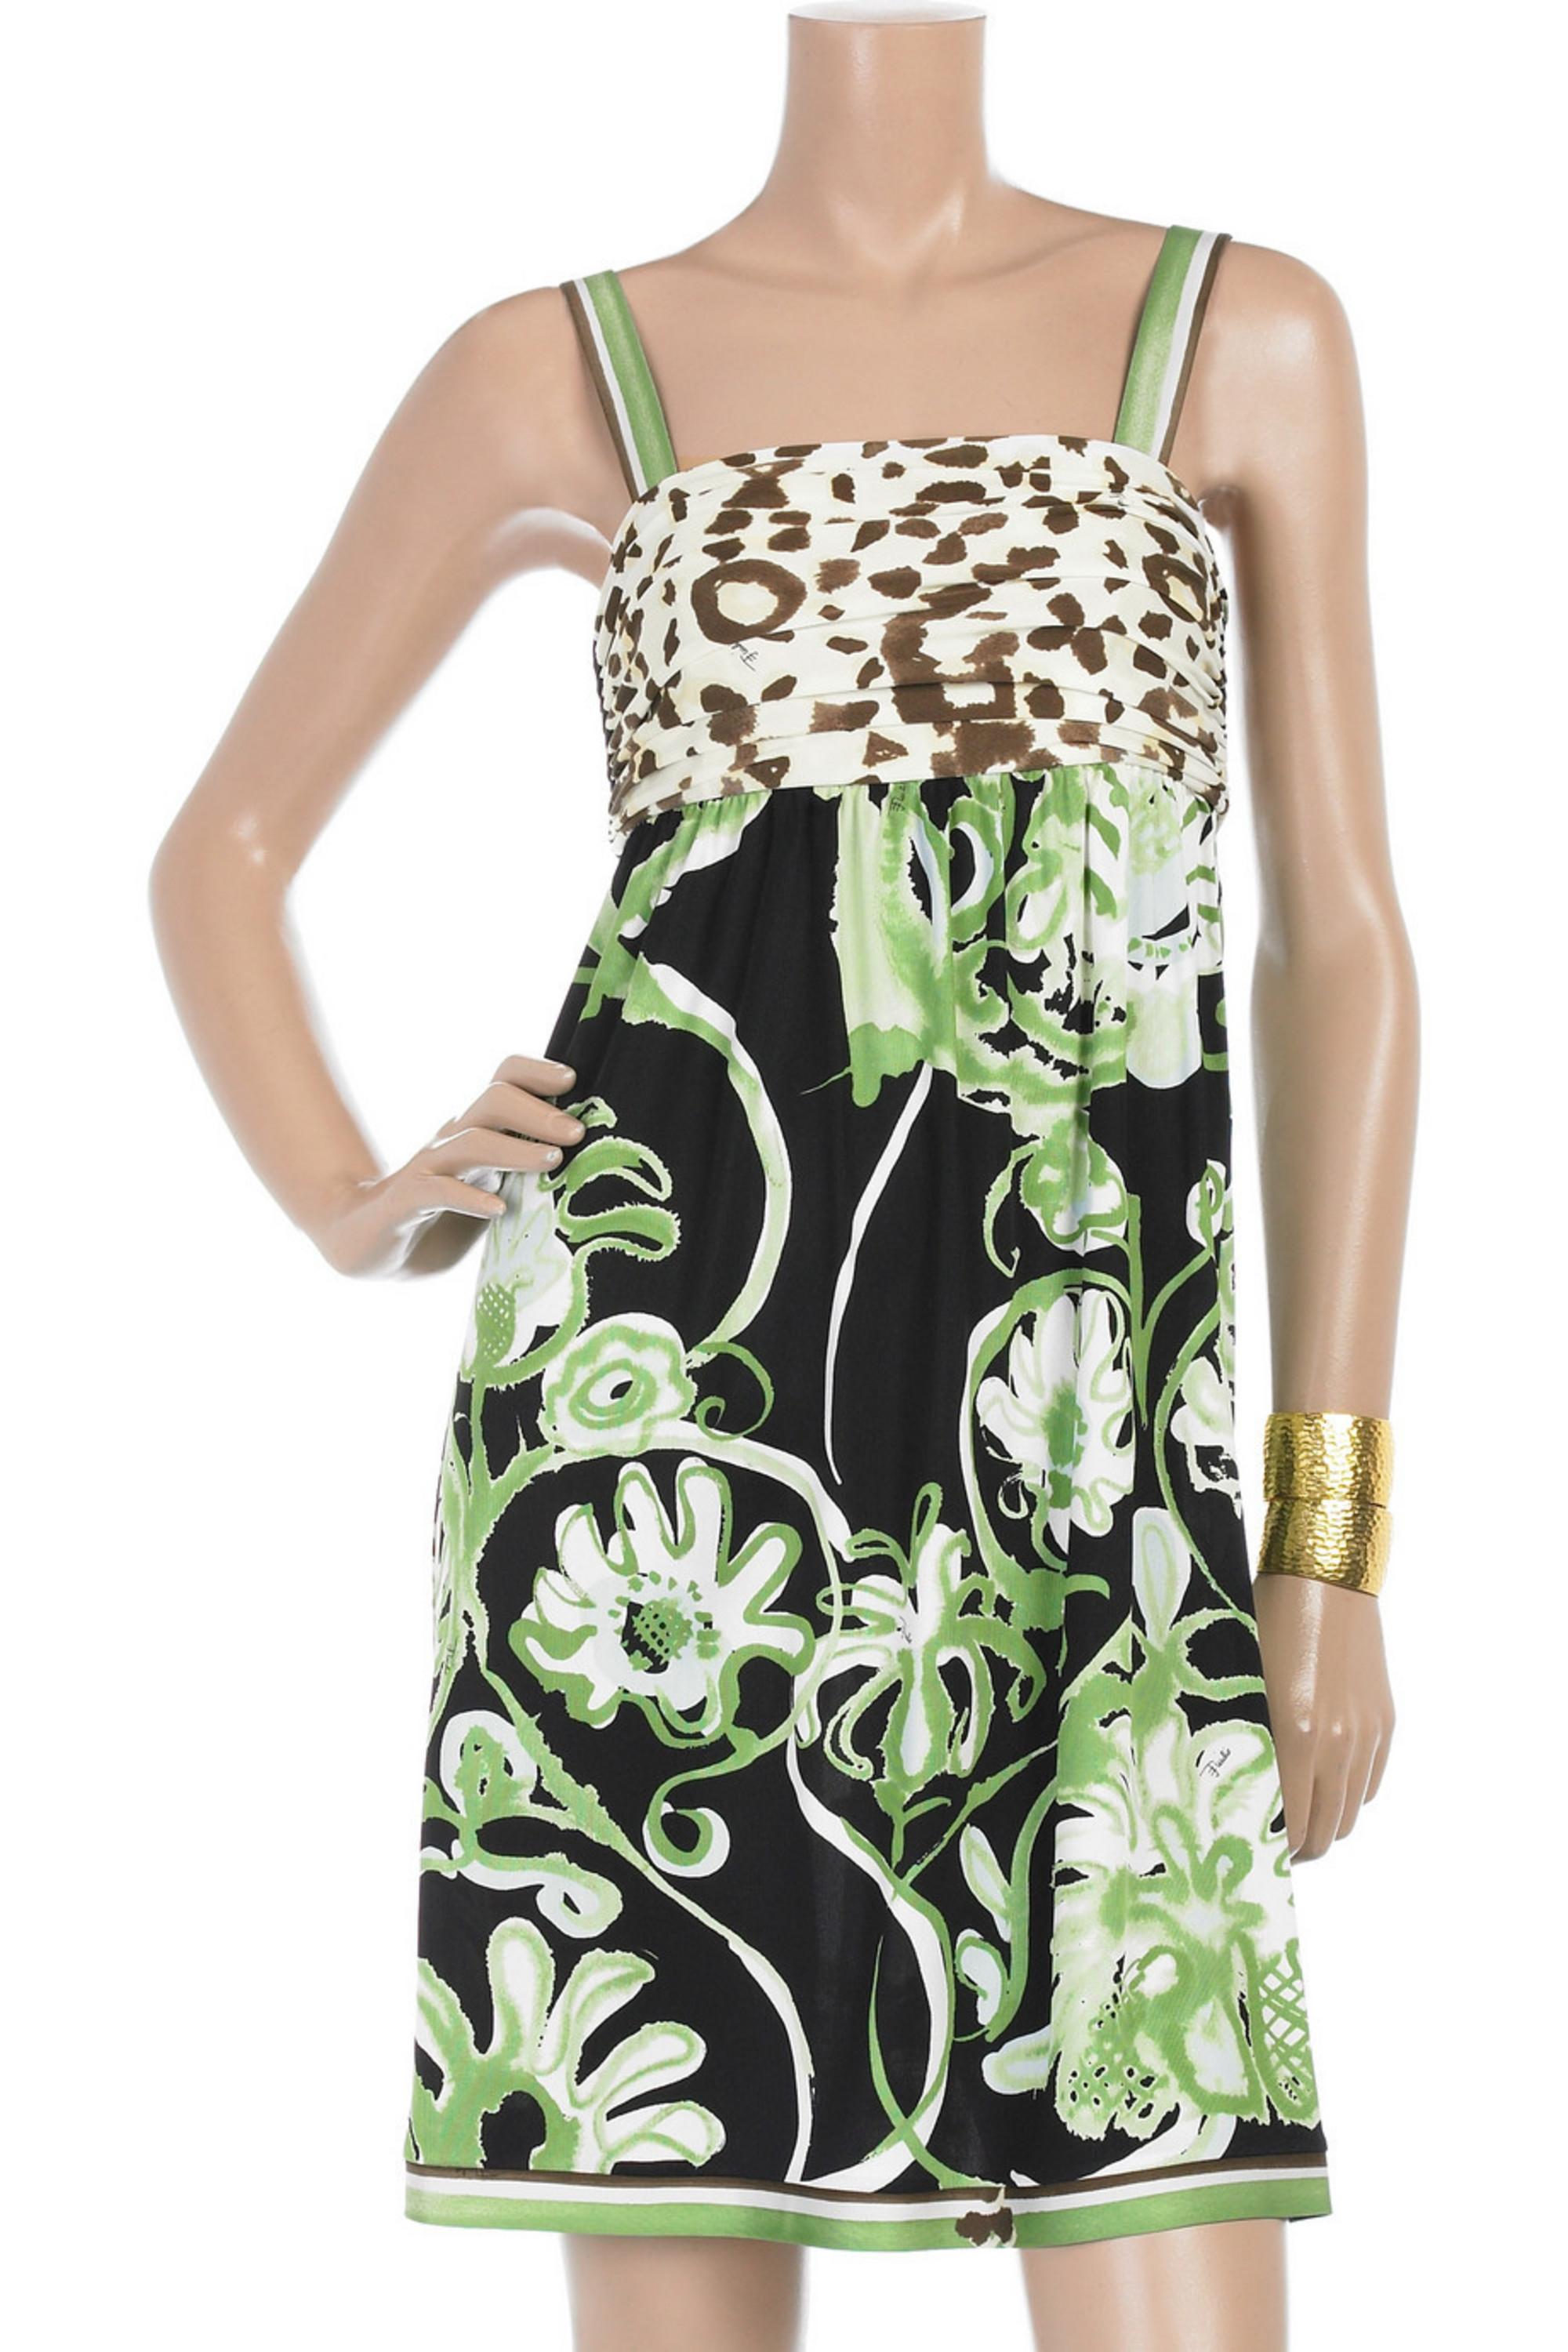 NEW Emilio Pucci Silk Jungle Cheetah Animal Floral Botanical Print Dress 42 For Sale 6